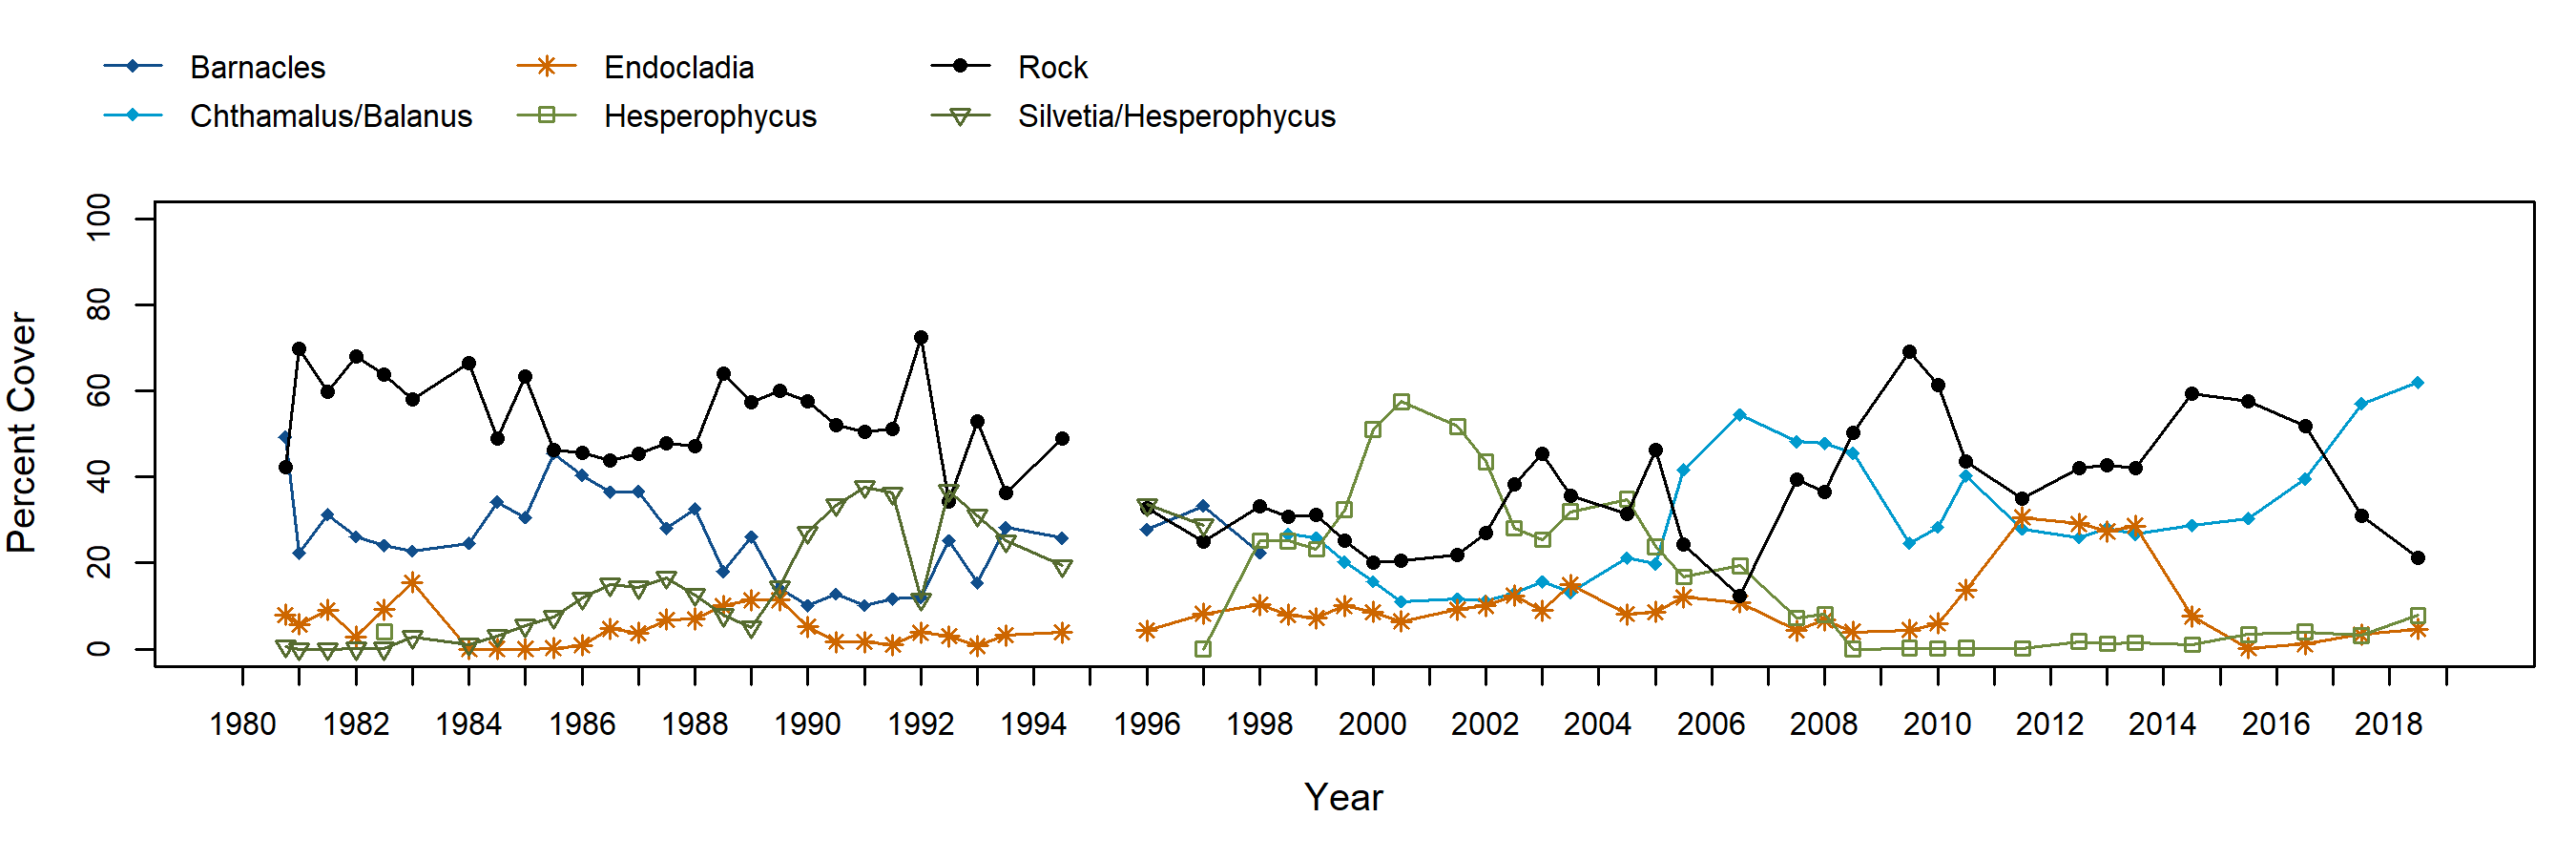 Cat Rock barnacle trend plot